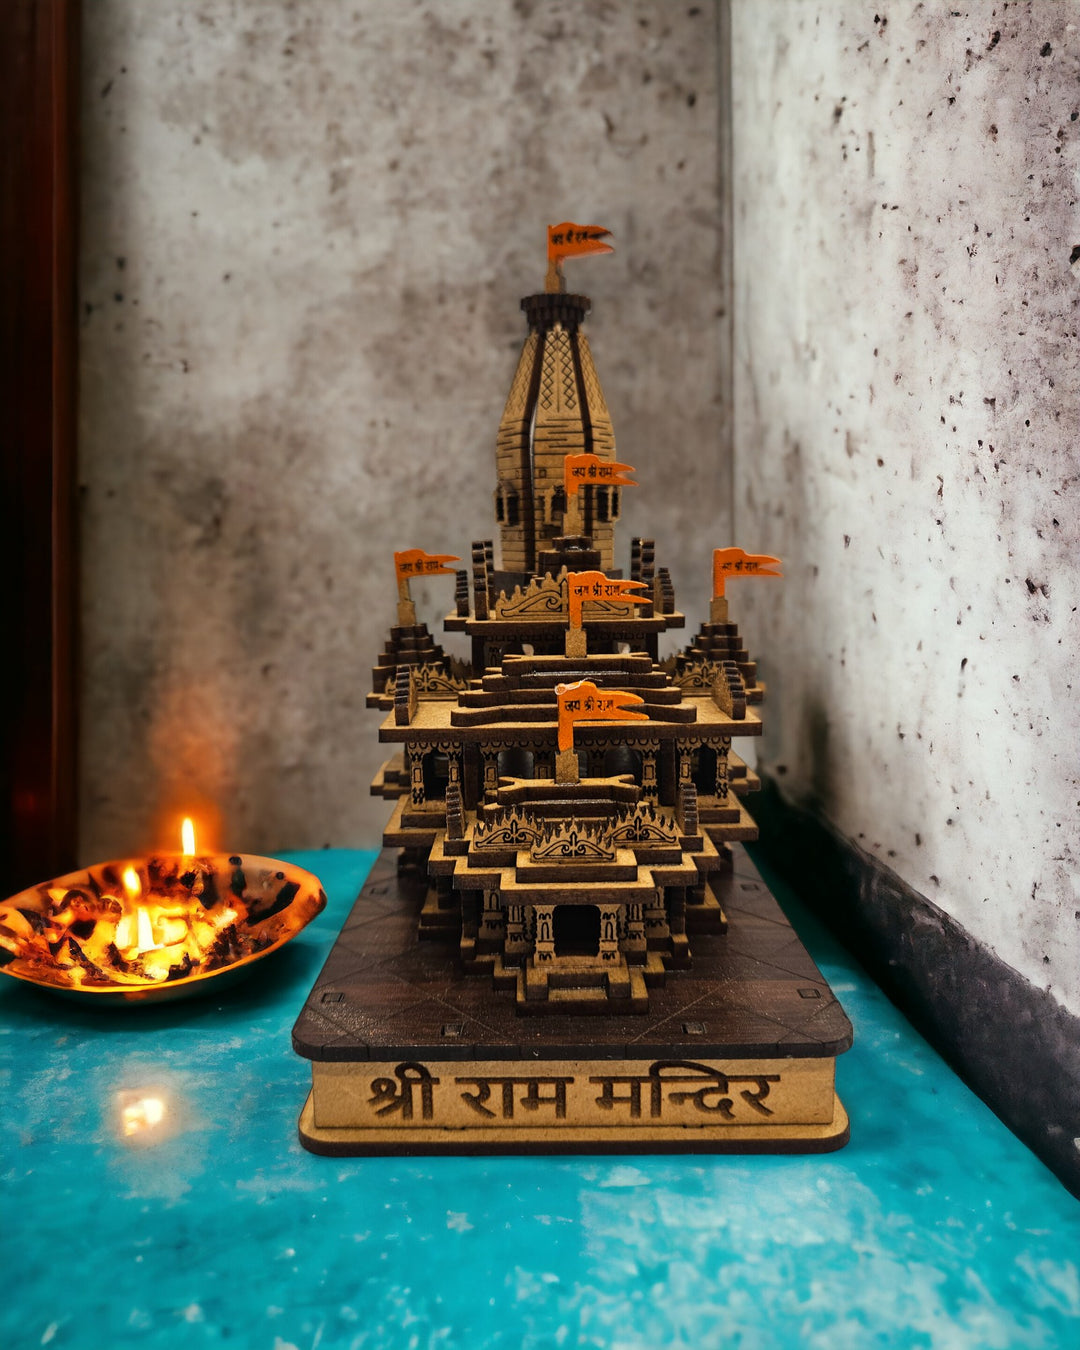 Tamas MDF Ram Mandir Ayodhya Wooden-Crafted Miniature Replica